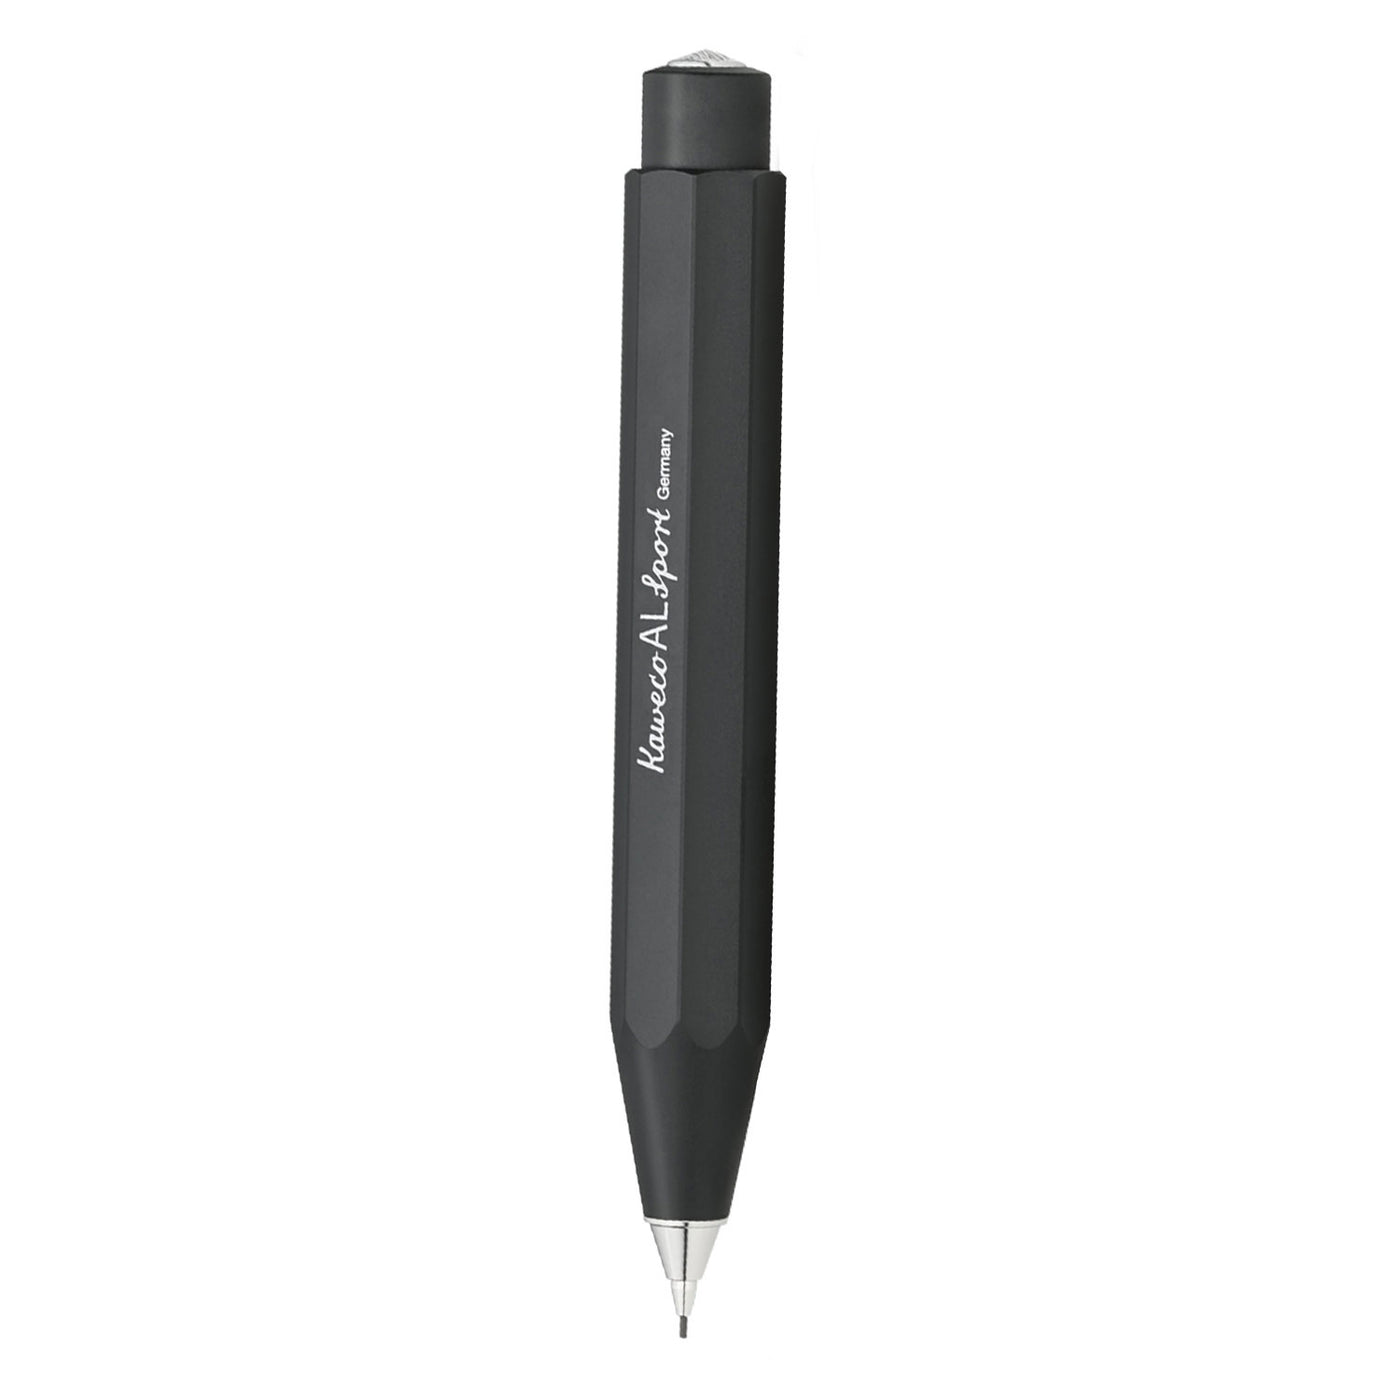 Kaweco AL Sports Mechanical Pencil, Black